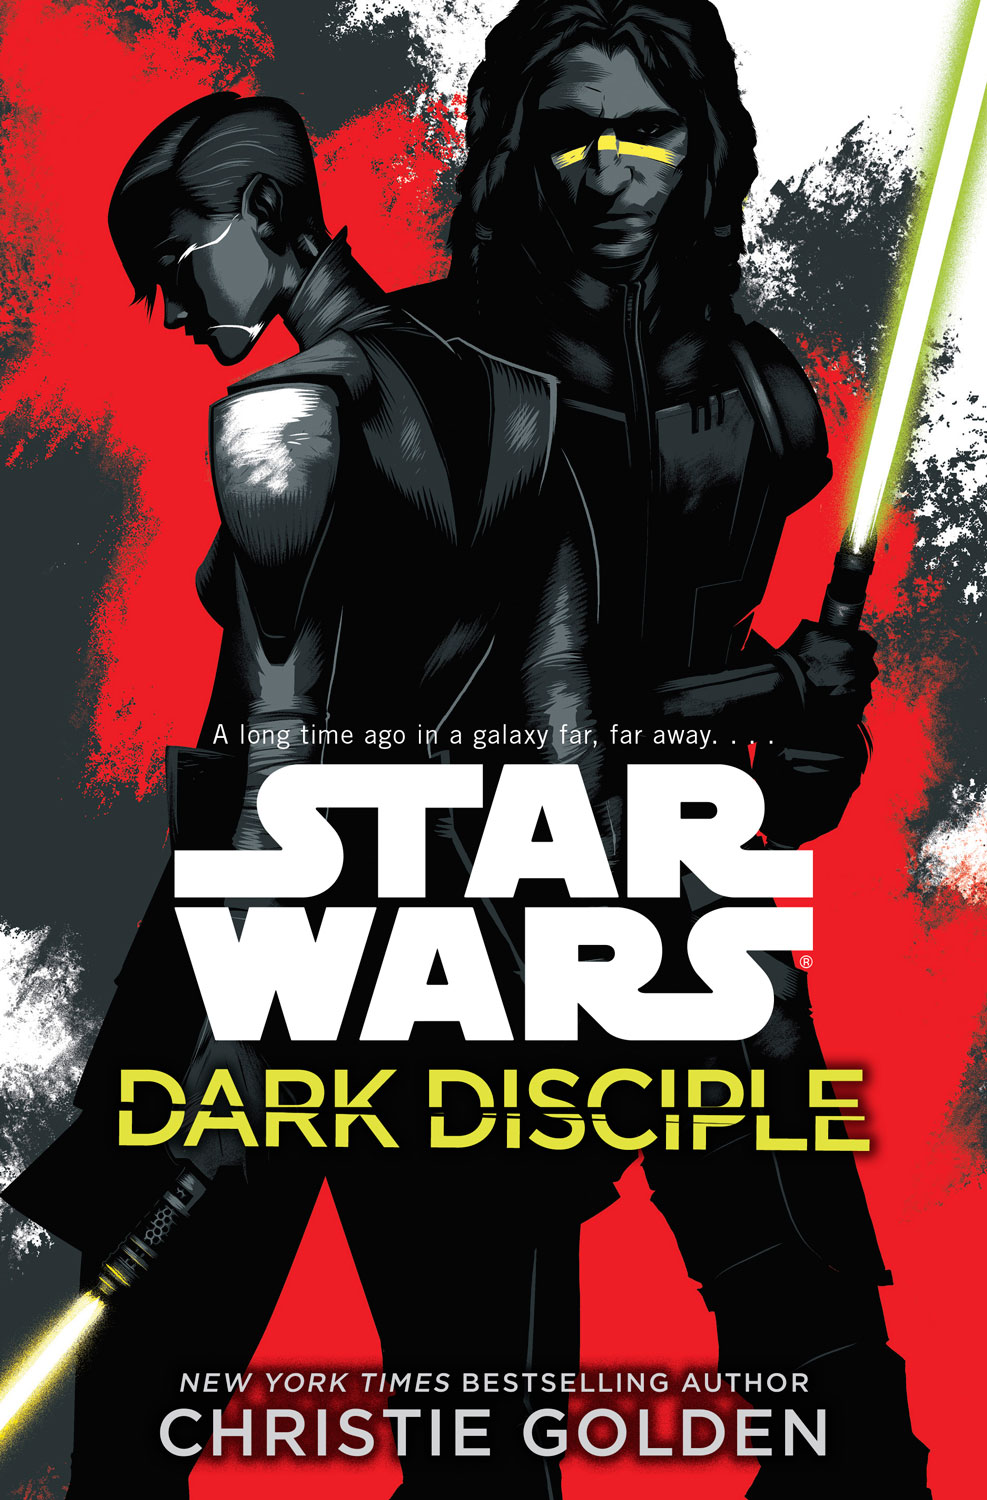 Dark Disciple artwork